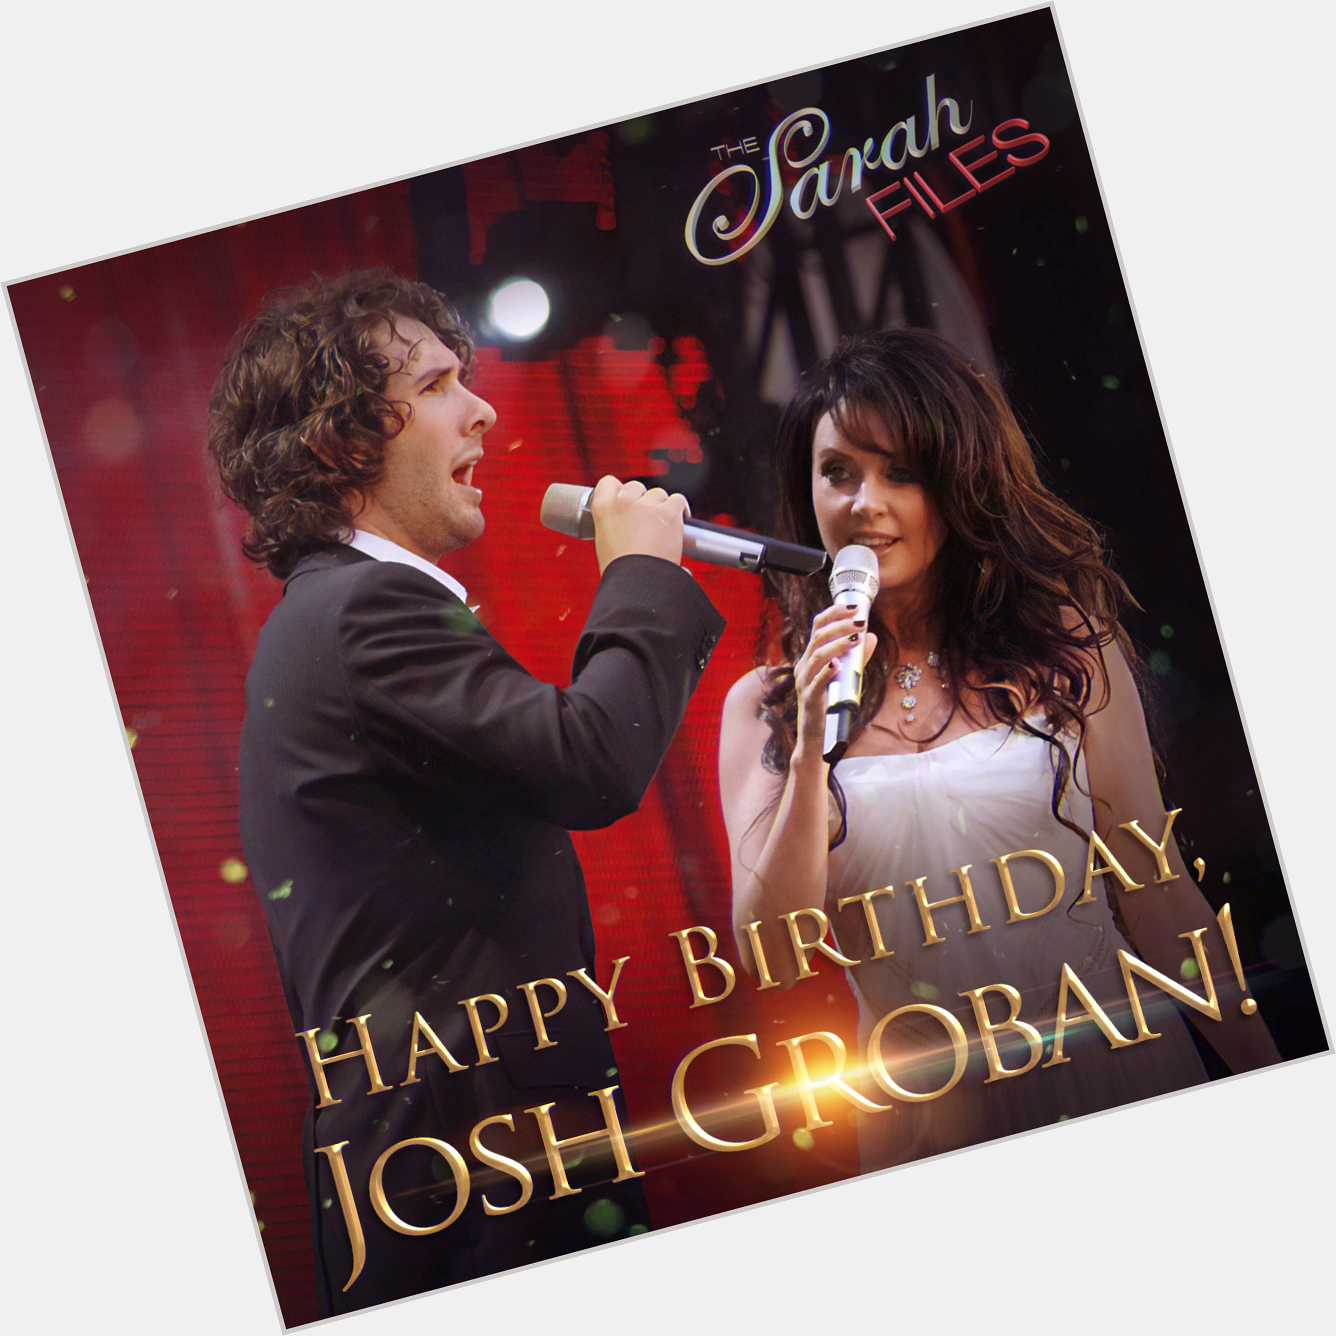 Happy birthday, Josh Groban!   